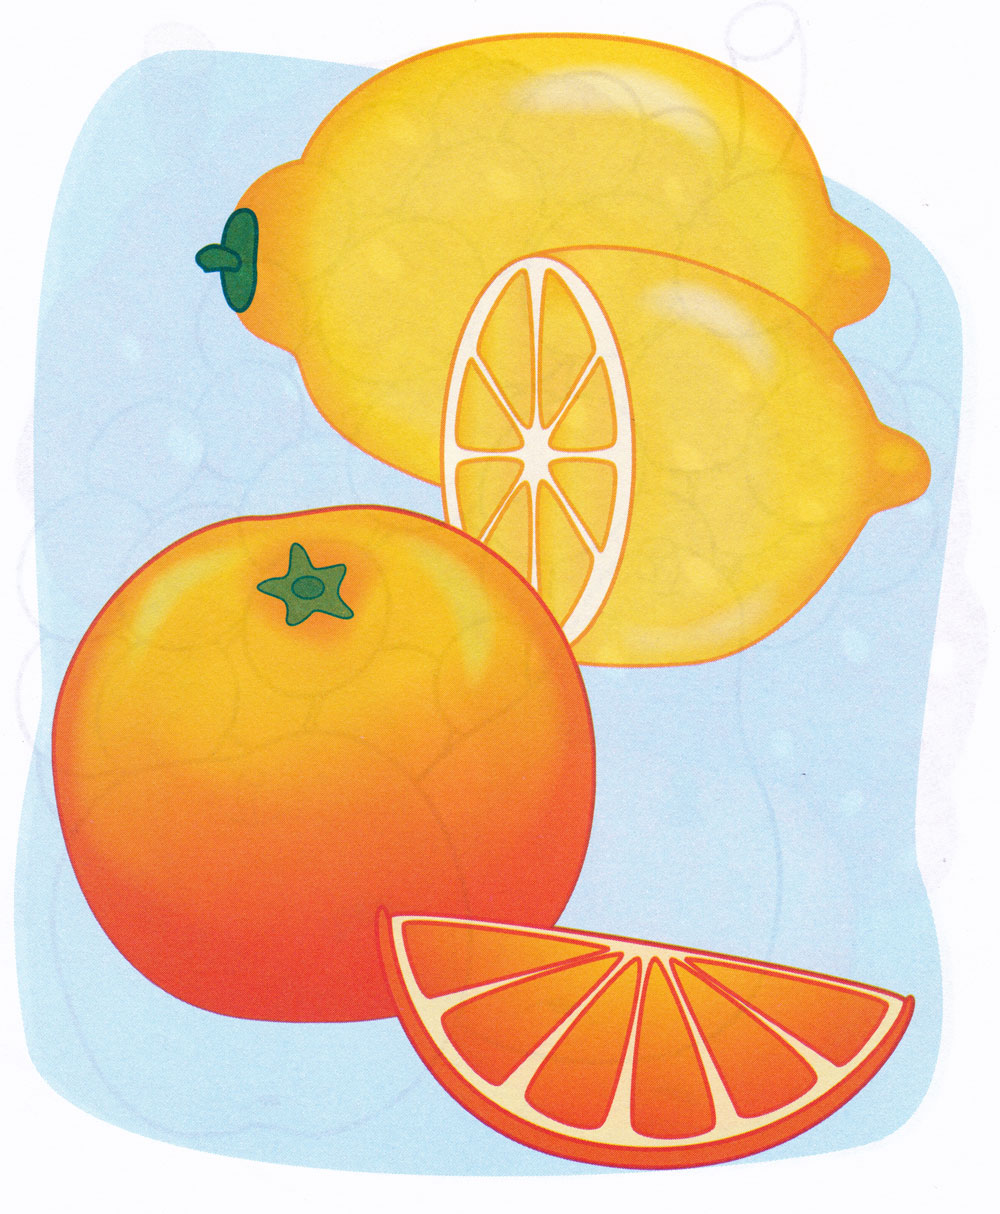 Раскраска апельсин | paraskevat.ru